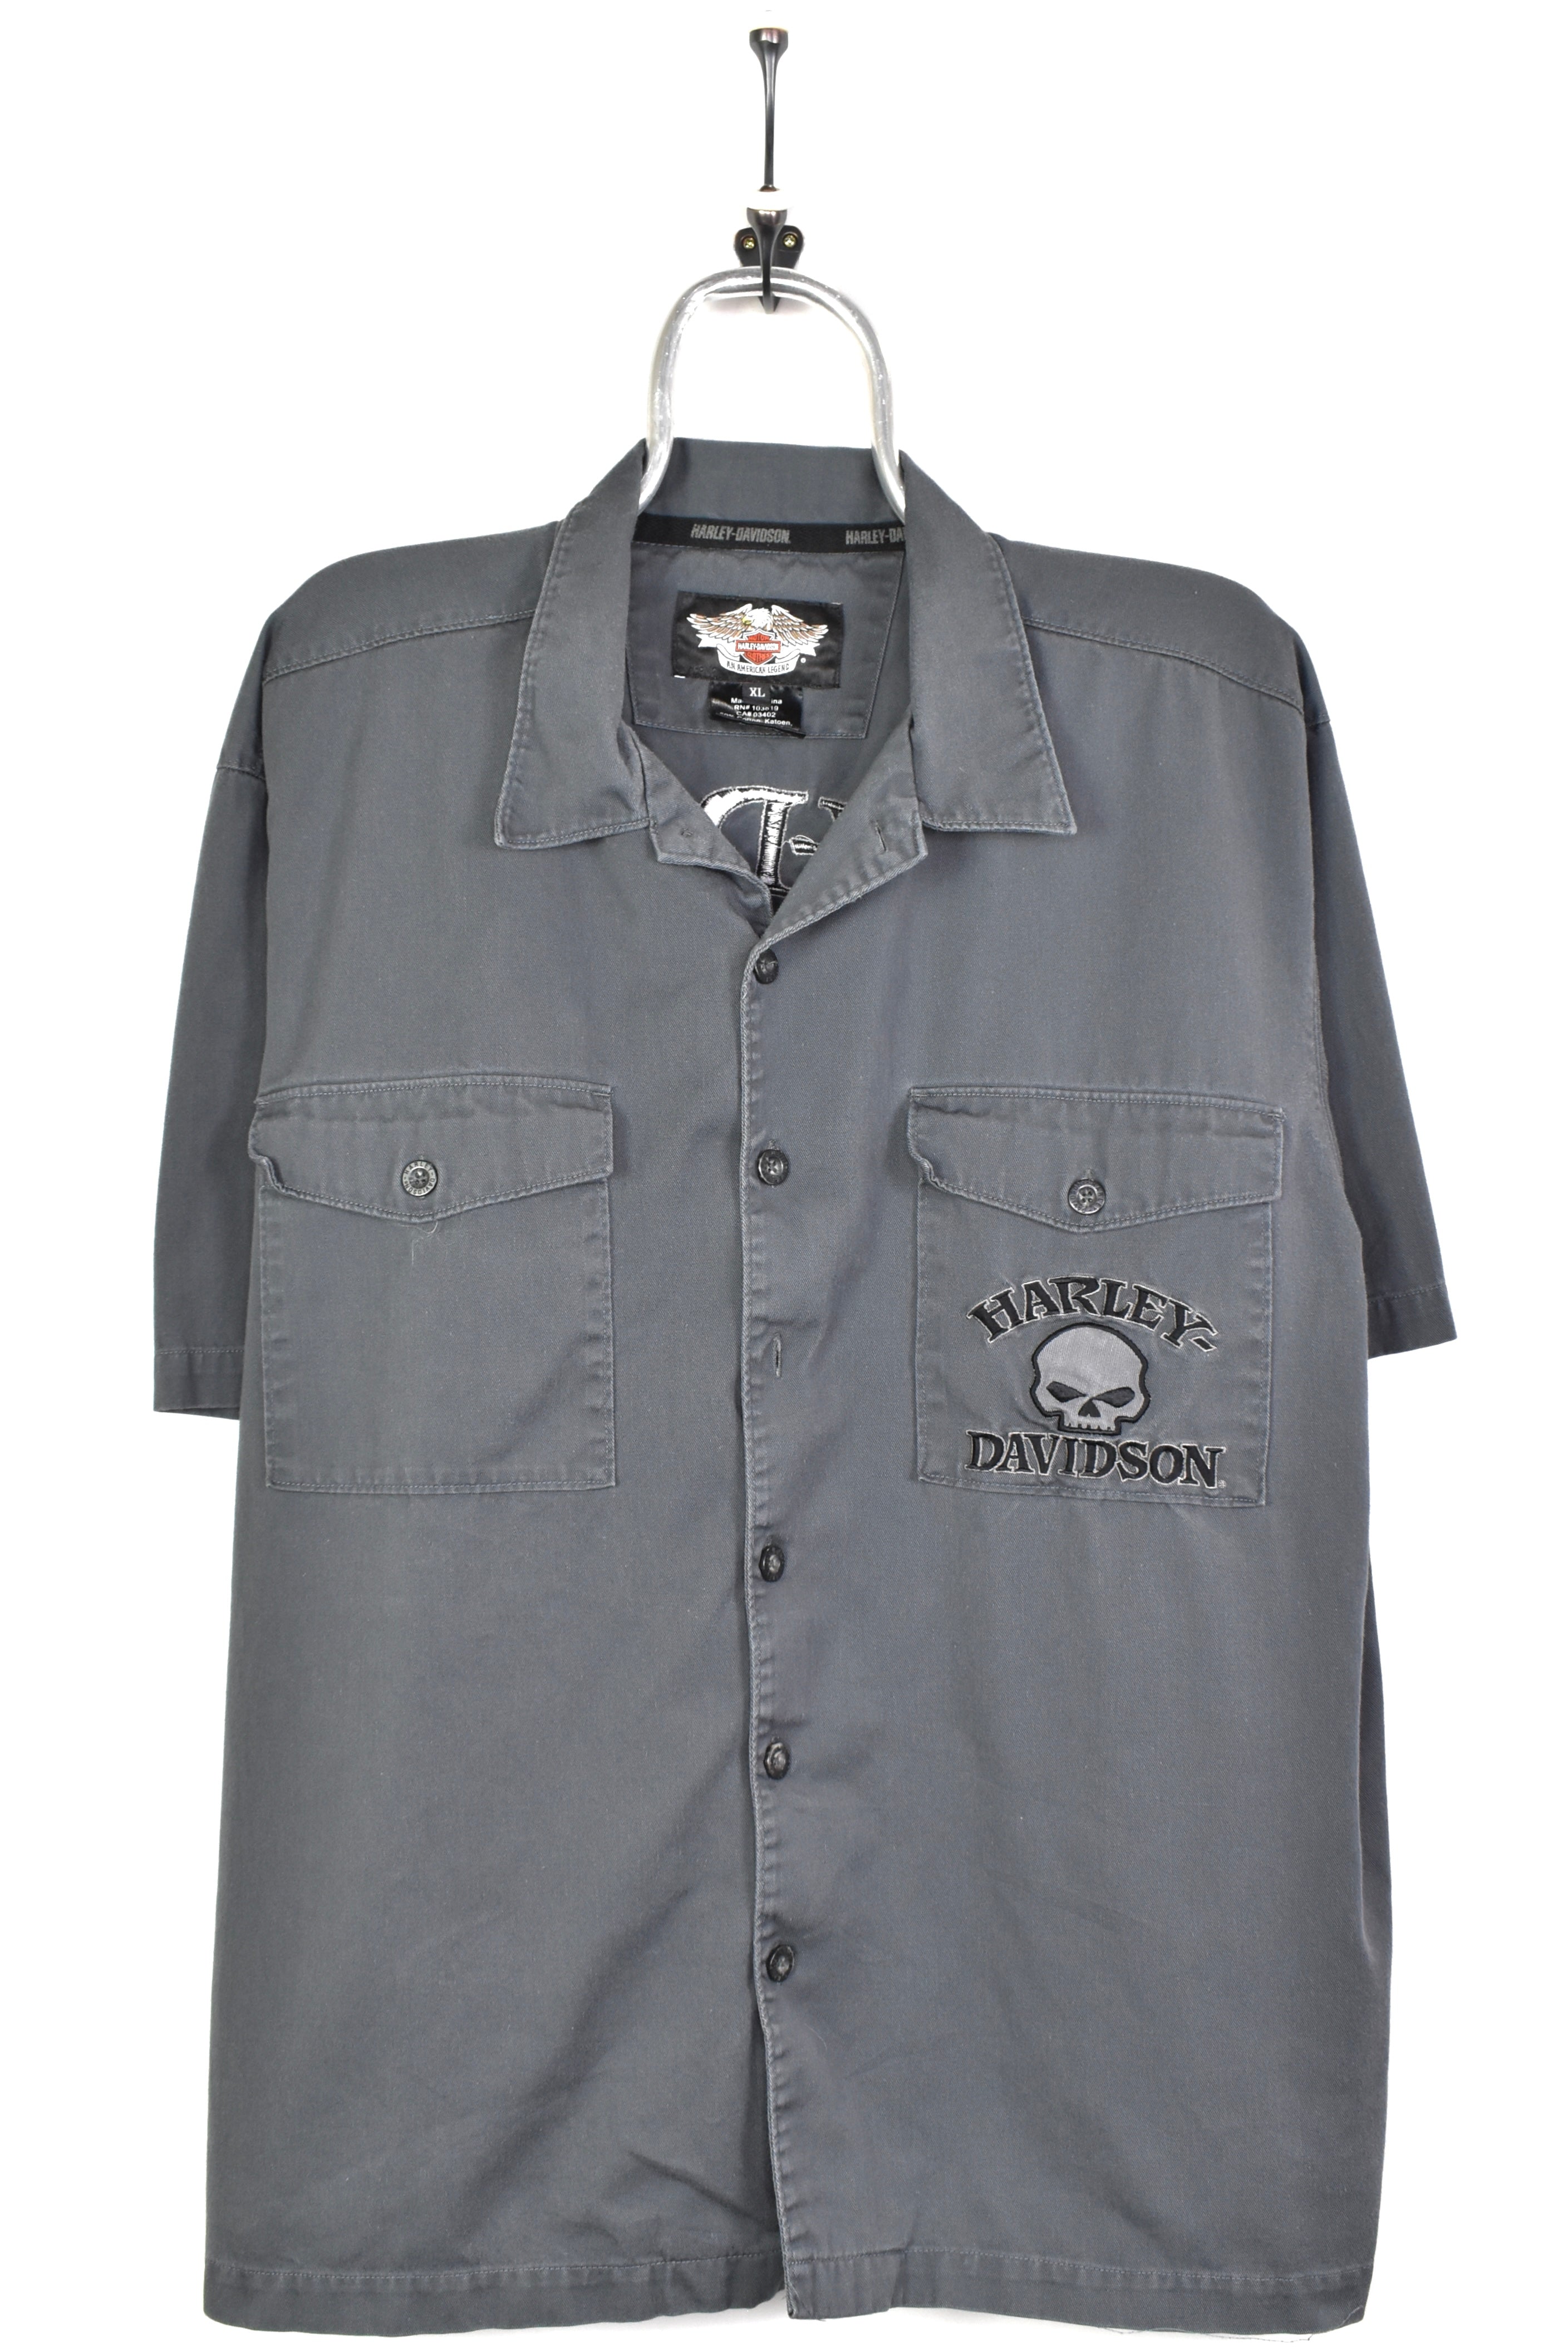 Modern Harley Davidson shirt, button up collared embroidered tee - AU XL HARLEY DAVIDSON